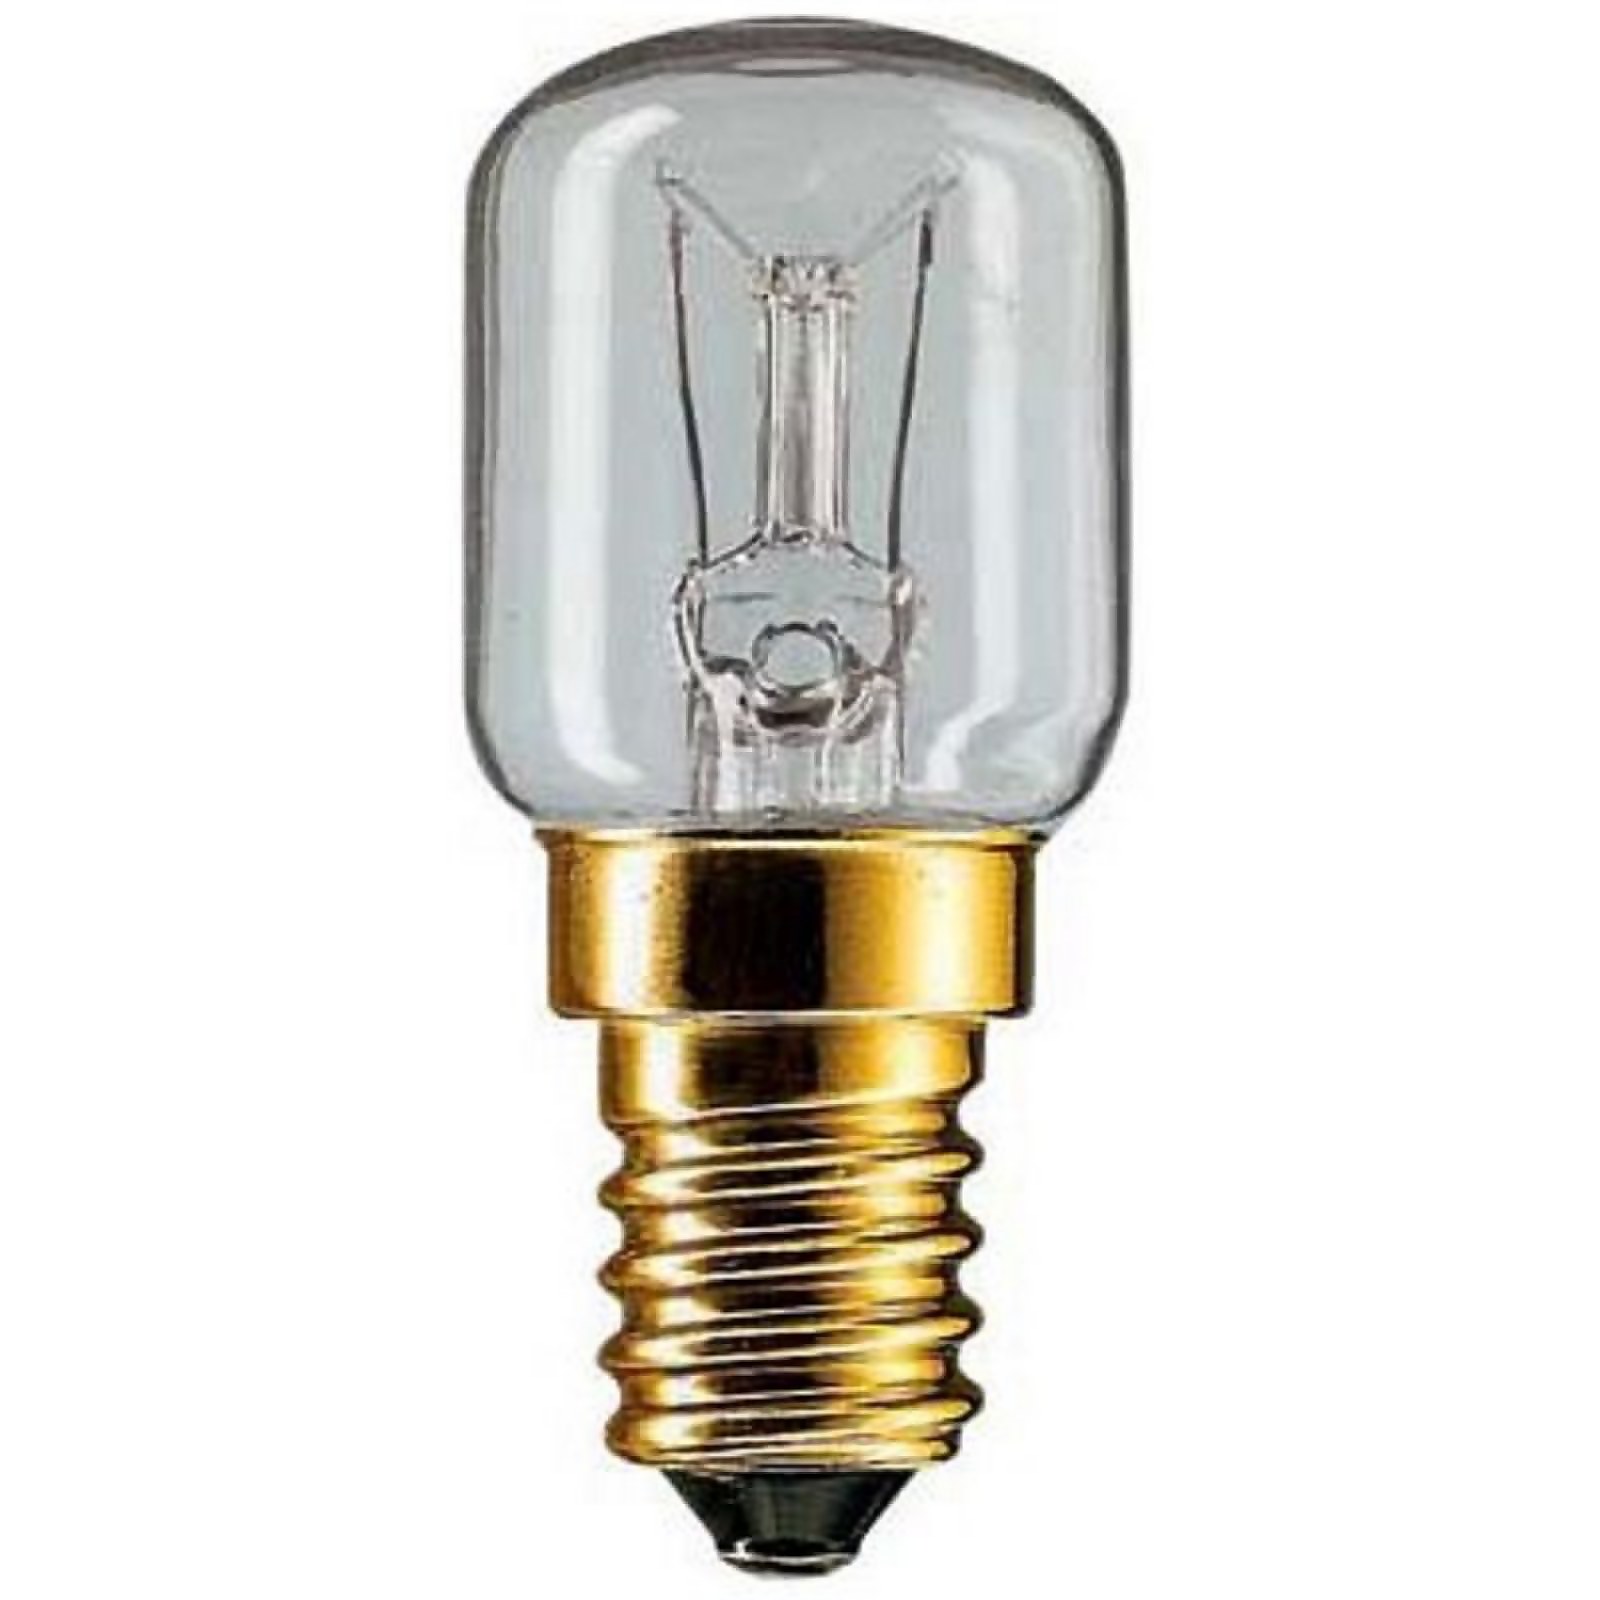 Photo of Ses 25w Oven Light Bulb